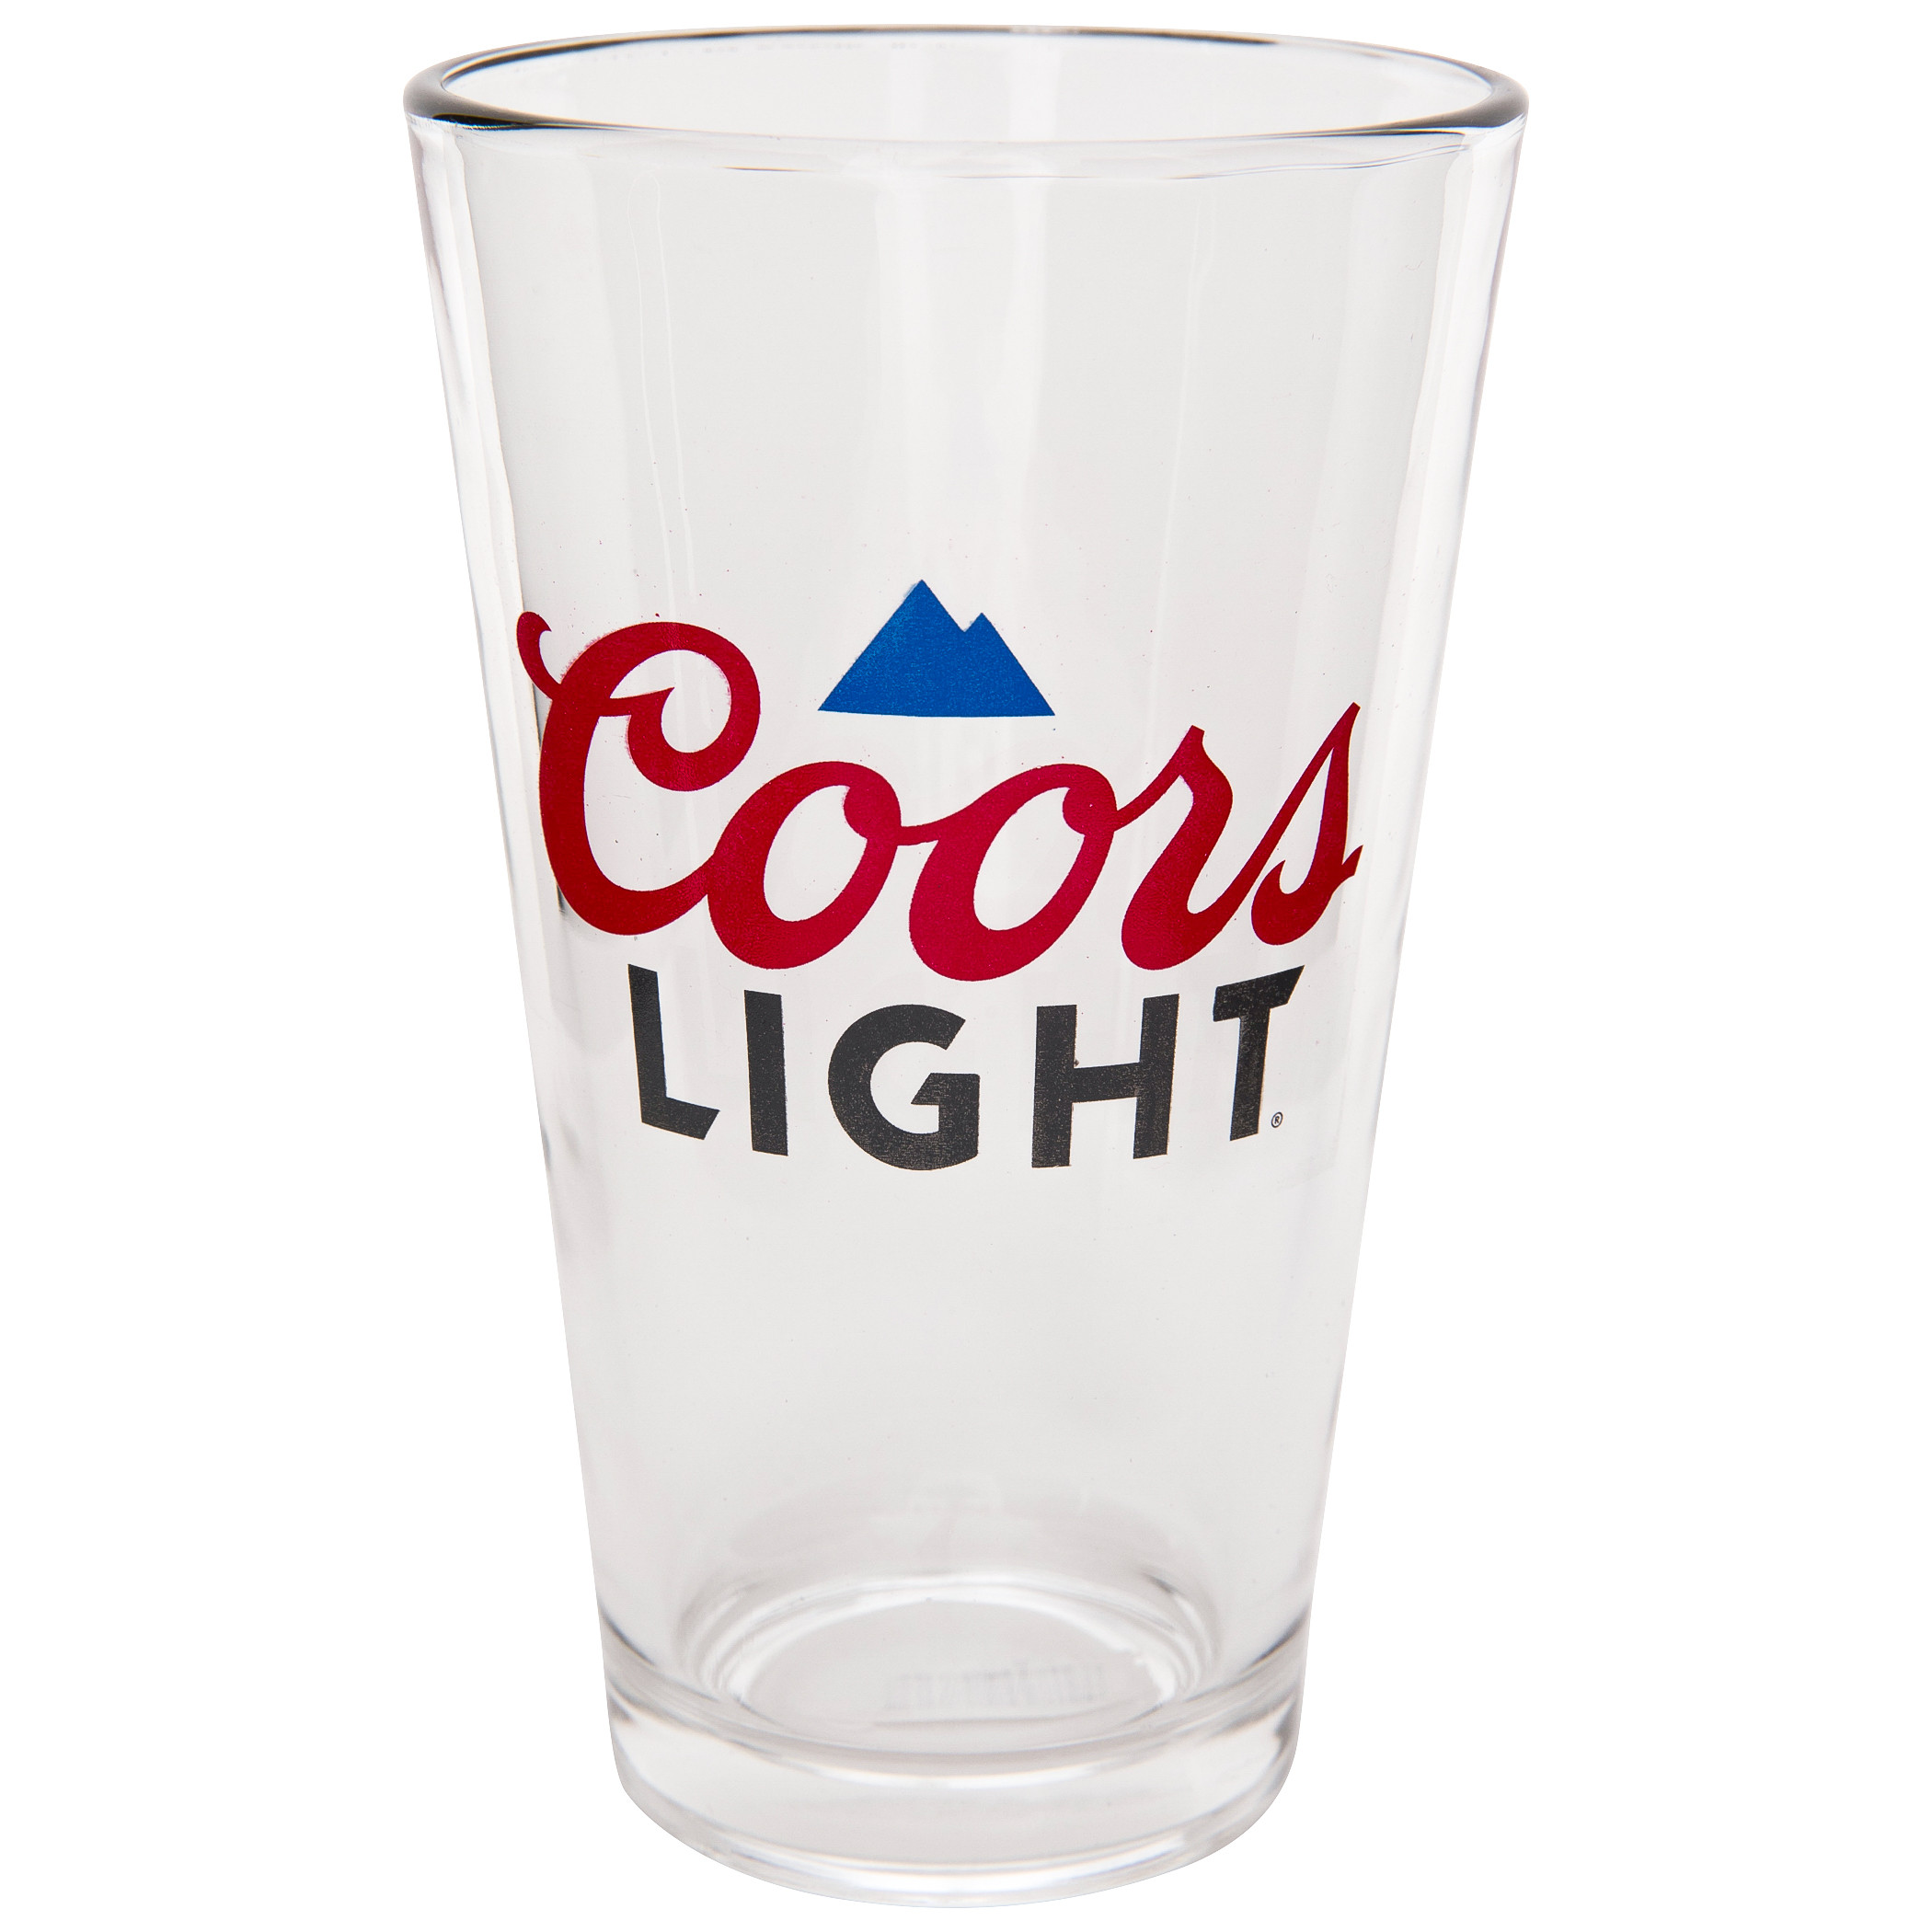 Coors Light Simple Logo 16oz Pint Glass